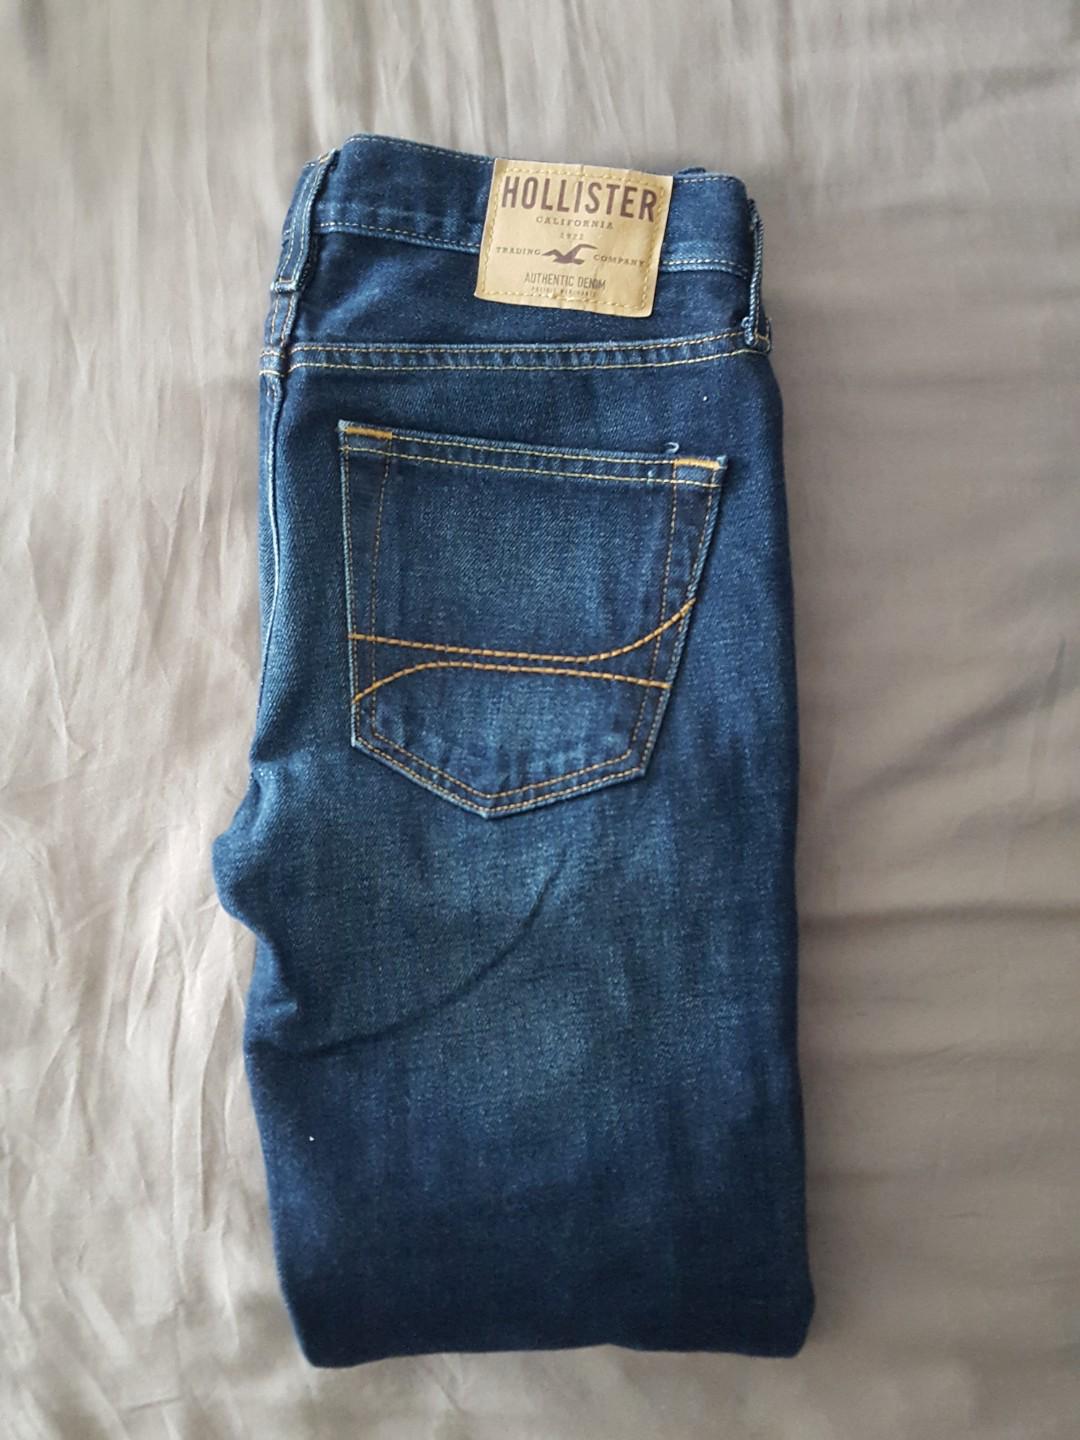 hollister male jeans